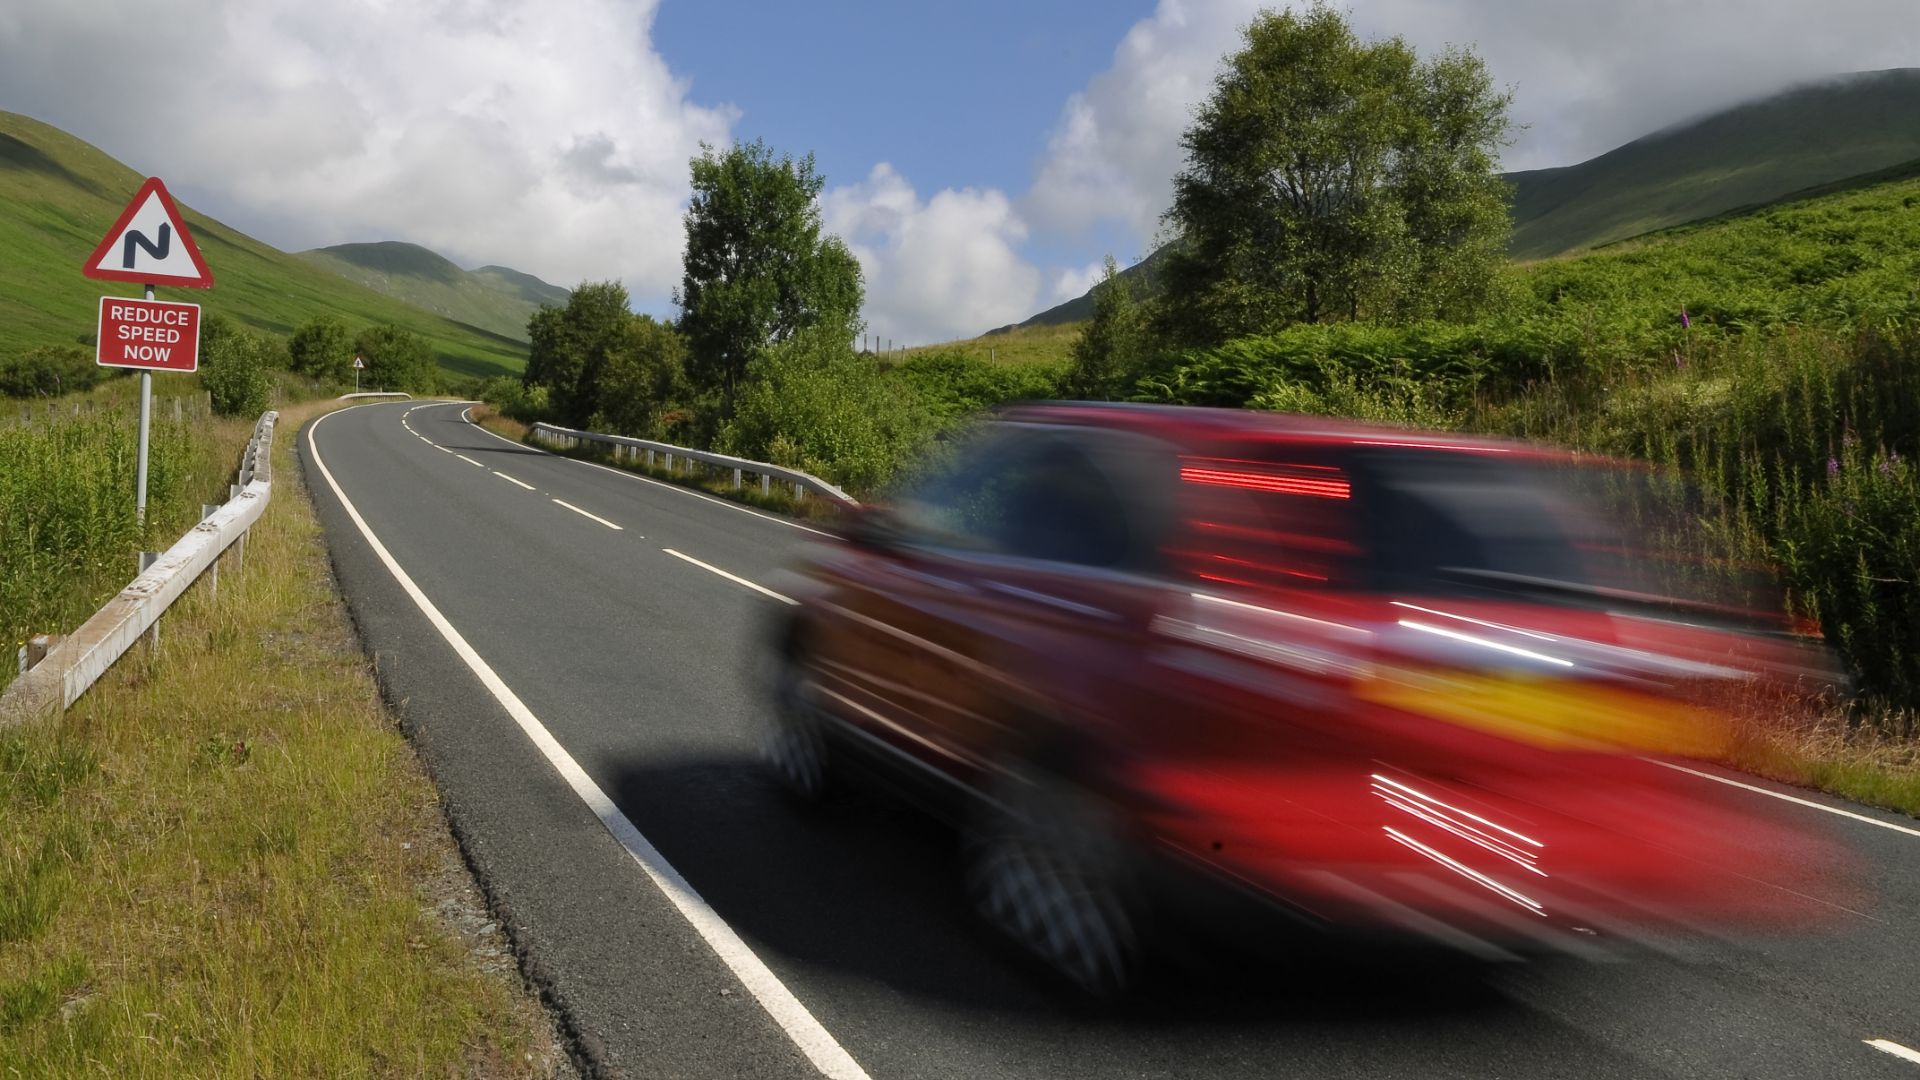 Hotspots for speeding in the UK